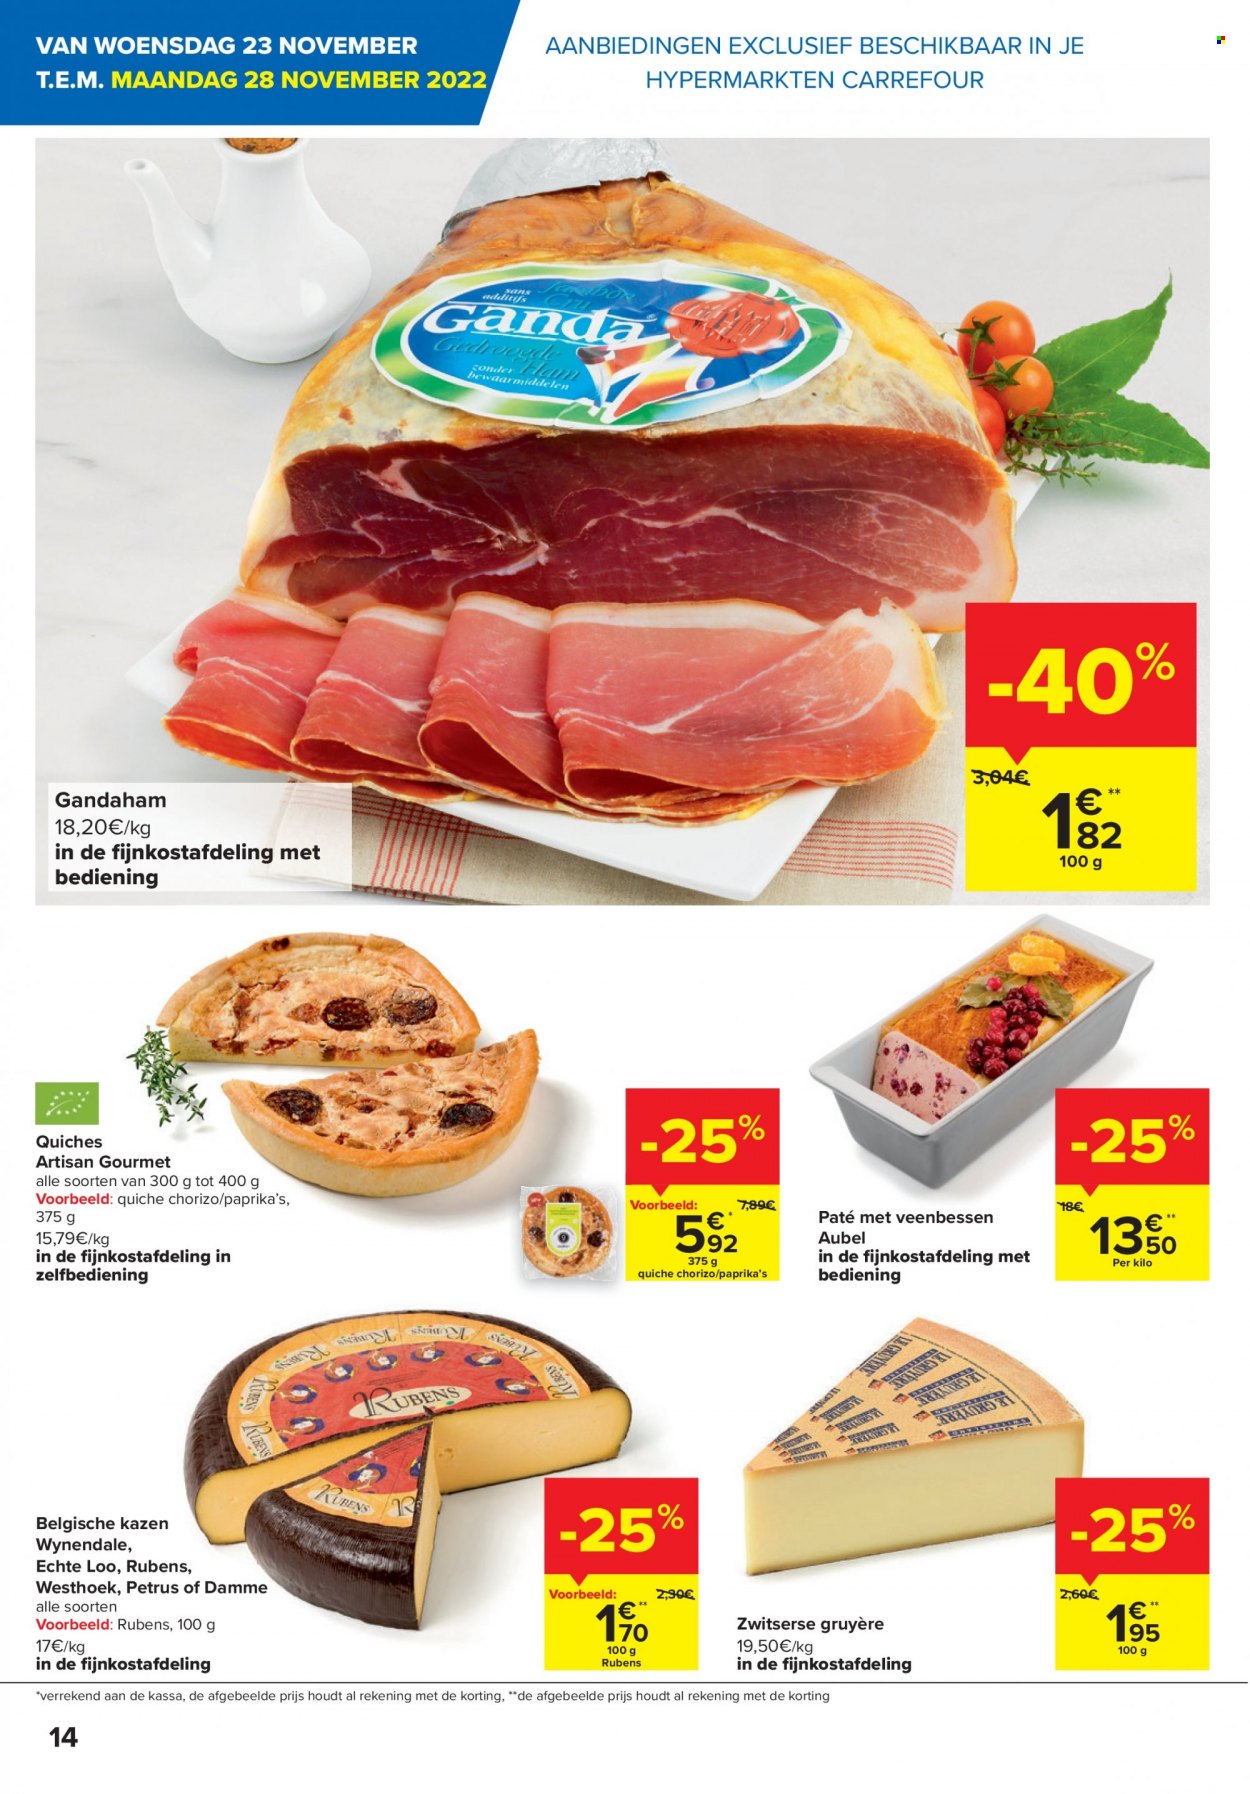 thumbnail - Carrefour hypermarkt-aanbieding - 23/11/2022 - 05/12/2022 -  producten in de aanbieding - chorizo, paté, Gruyère. Pagina 14.